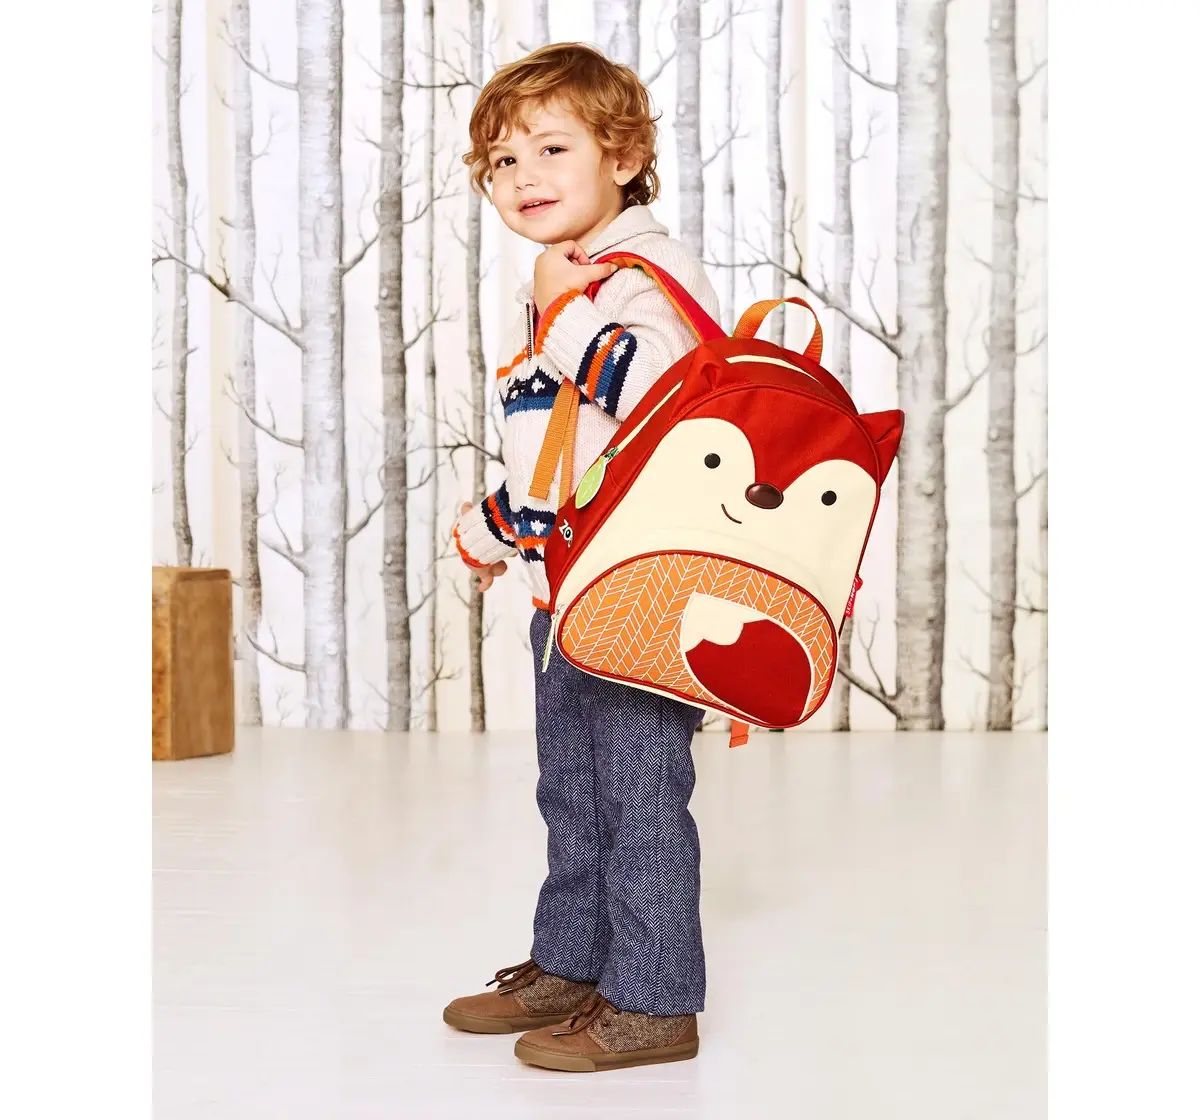 Skip Hop Zoo Little Kid Backpack Fox 3Y+, Multicolour